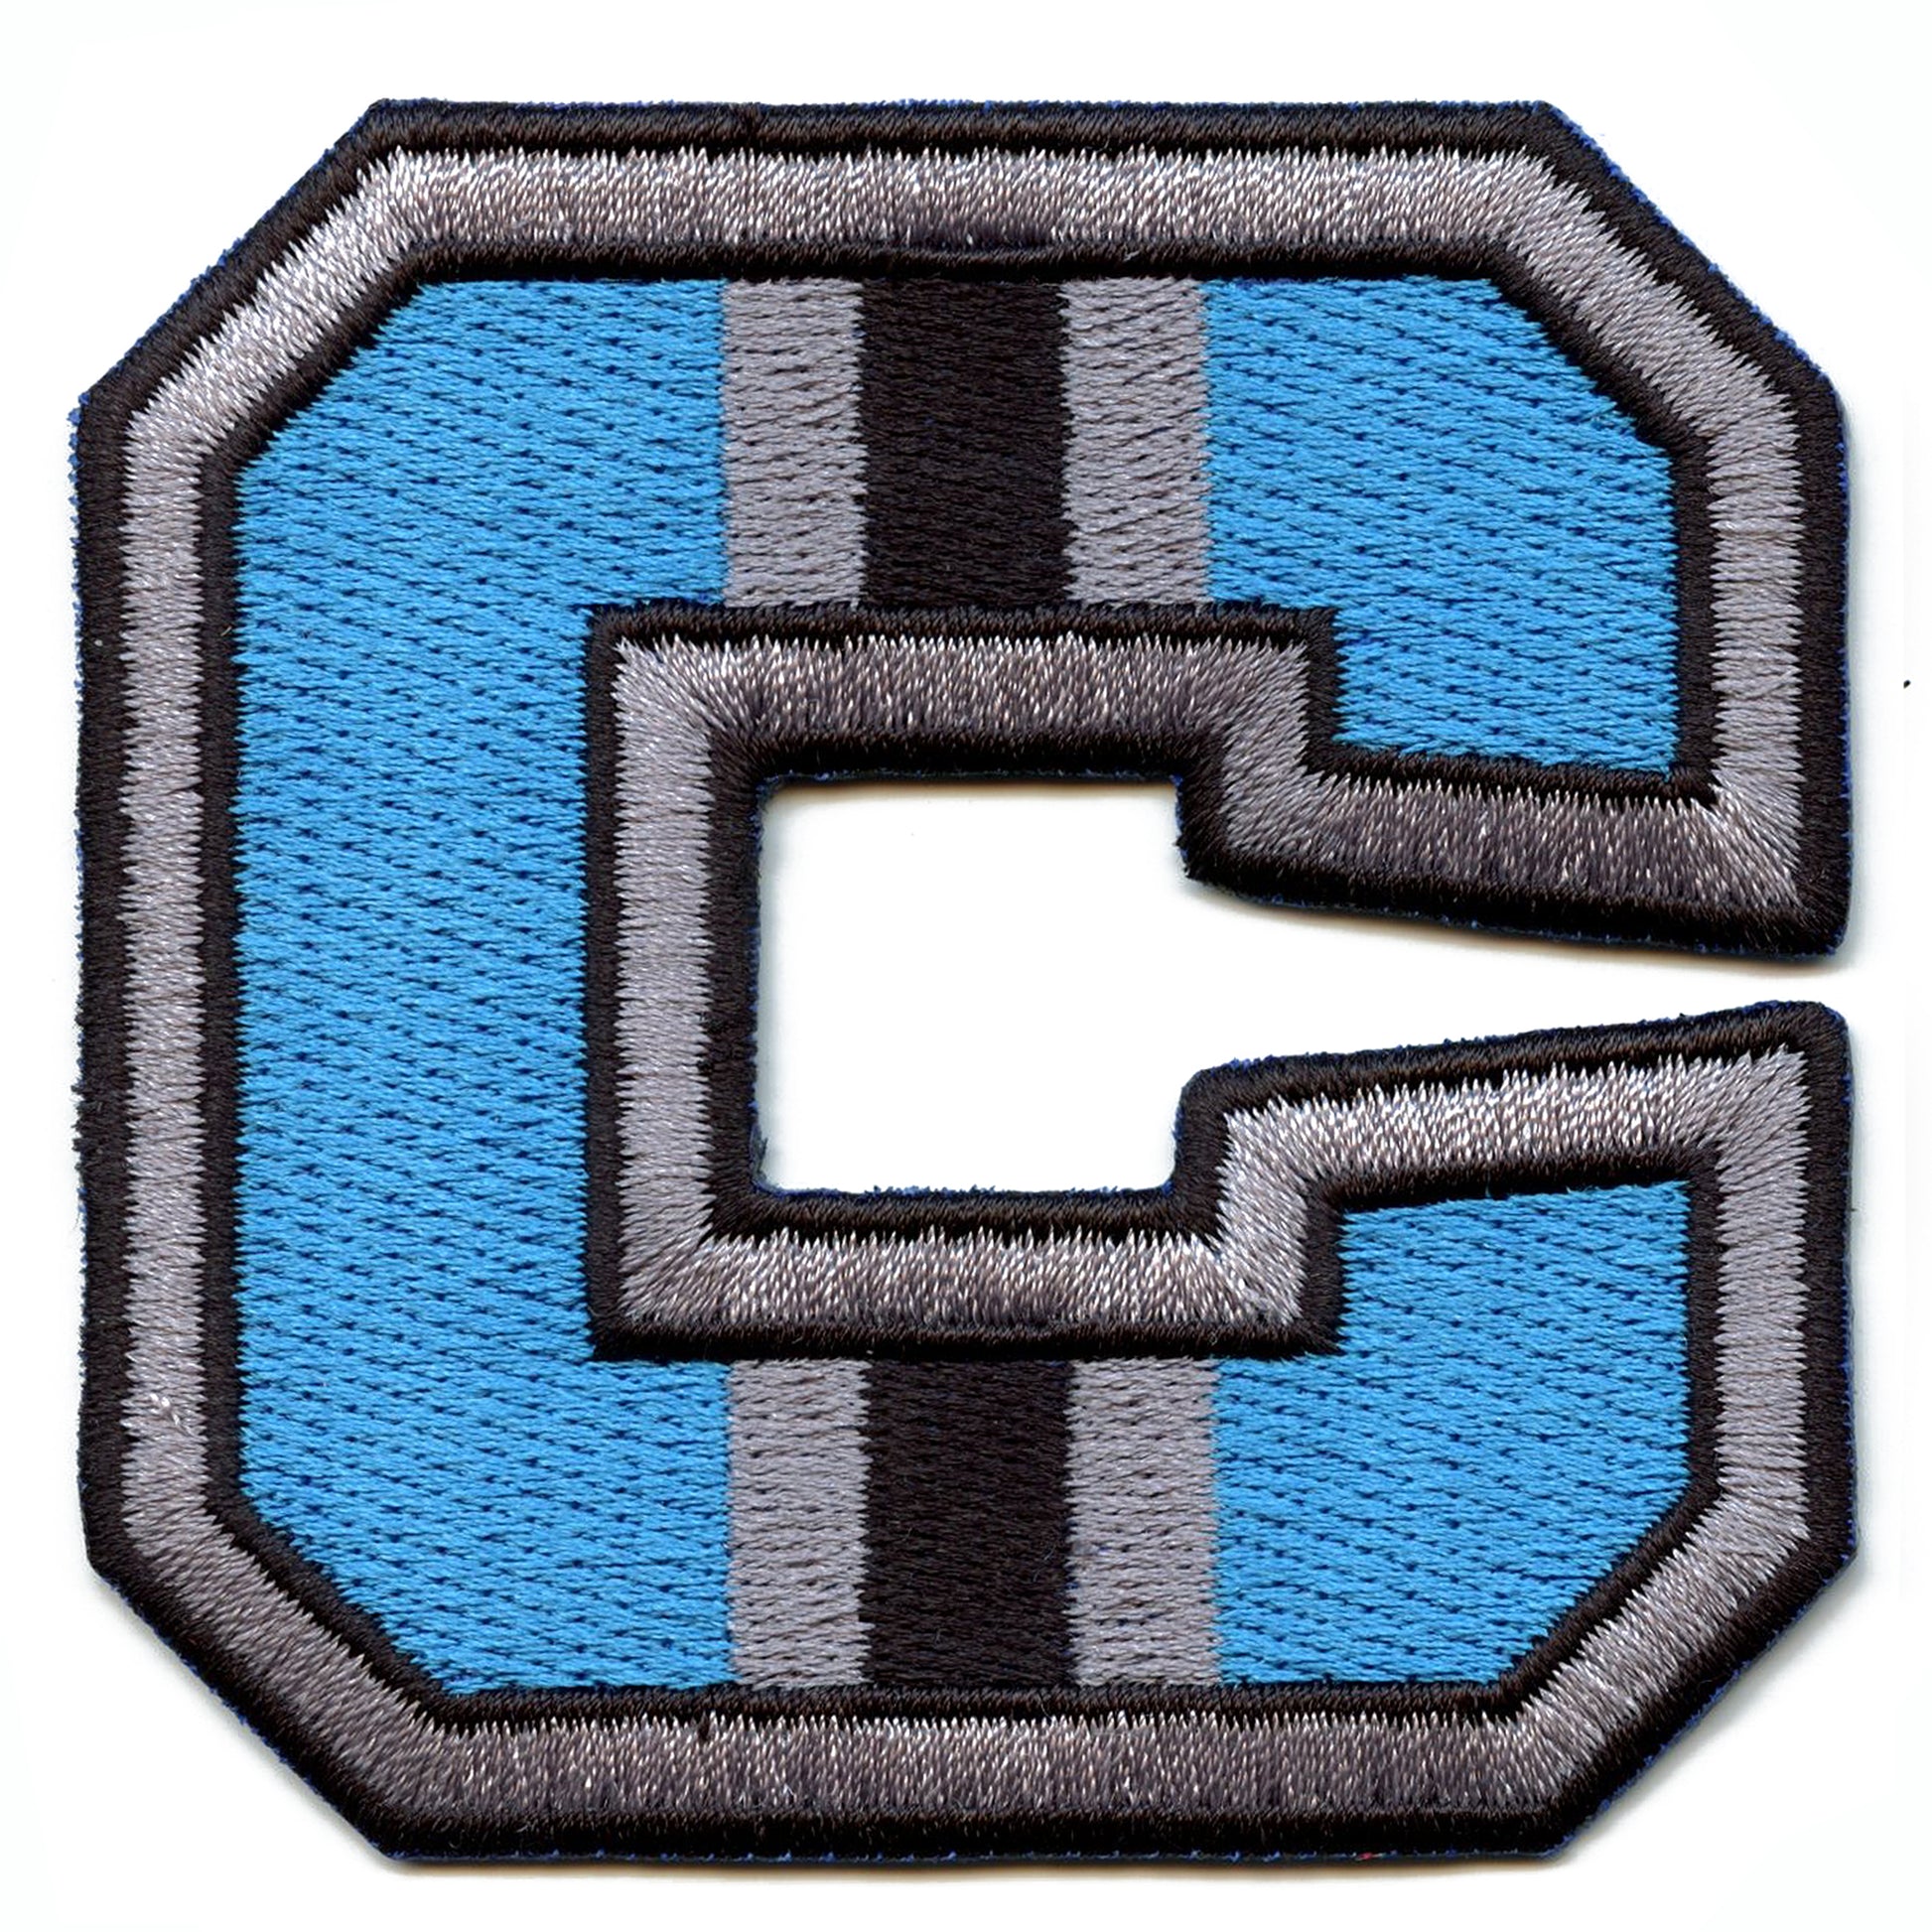 City Of North Carolina "C" Logo Football Jersey Parody Embroidered Iron On Patch 